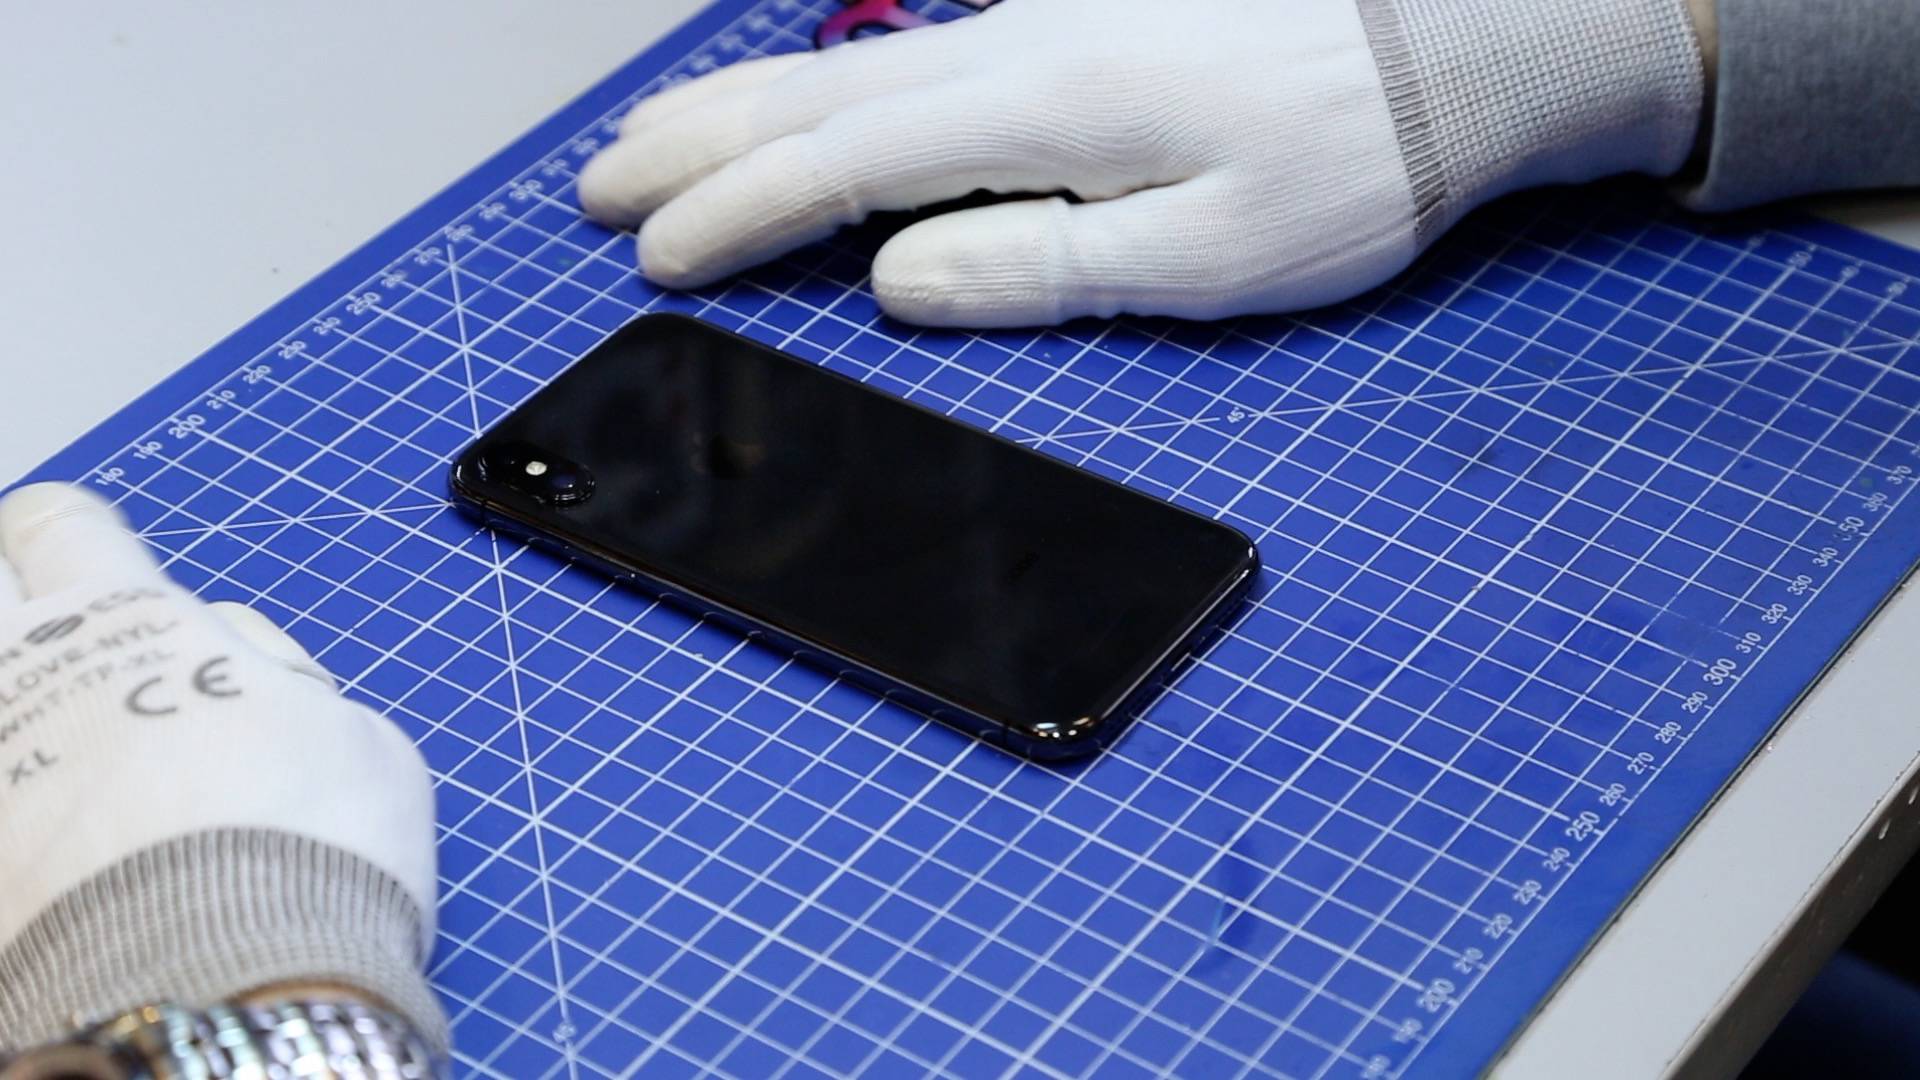 #Видео: Как мы меняли разбитое стекло iPhone X